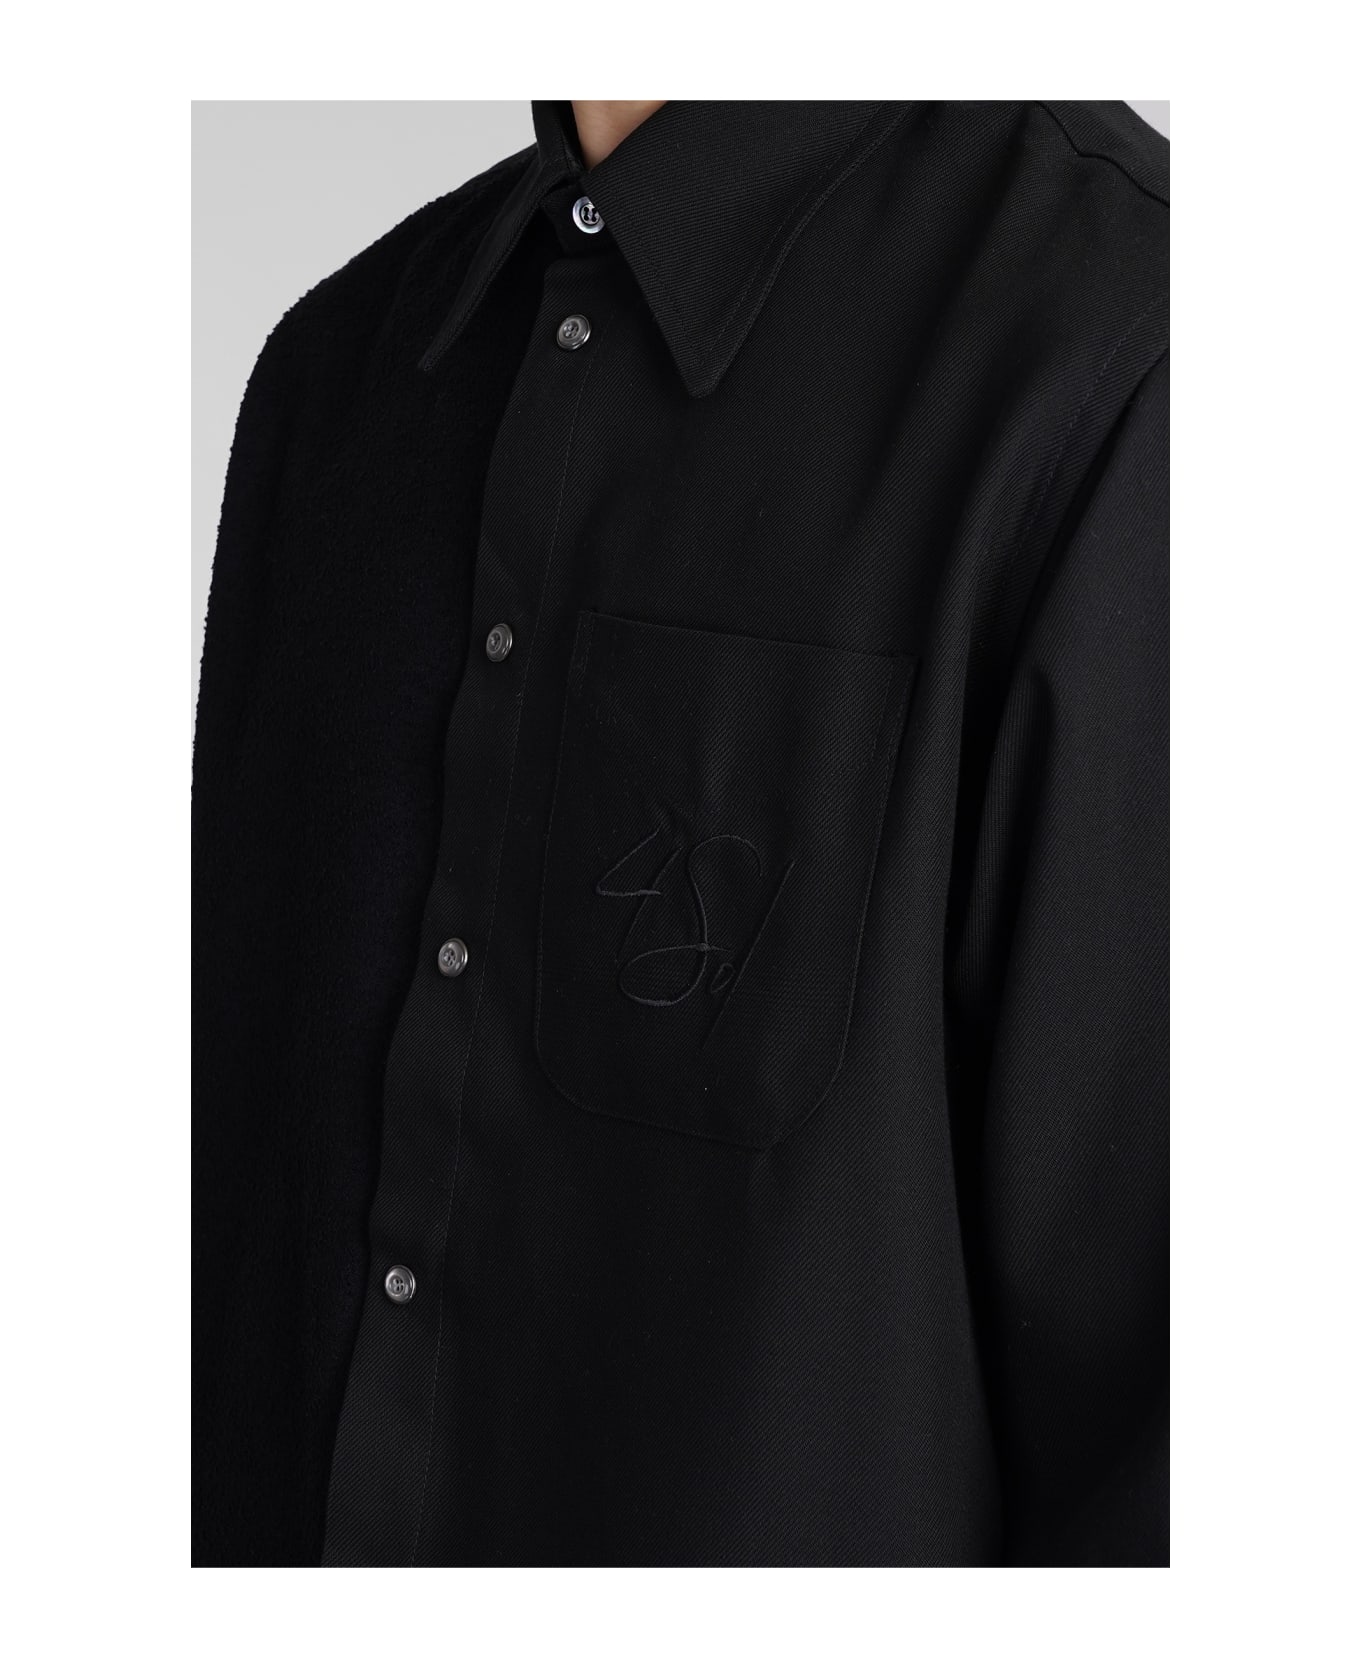 4sdesigns Shirt In Black Cotton - black